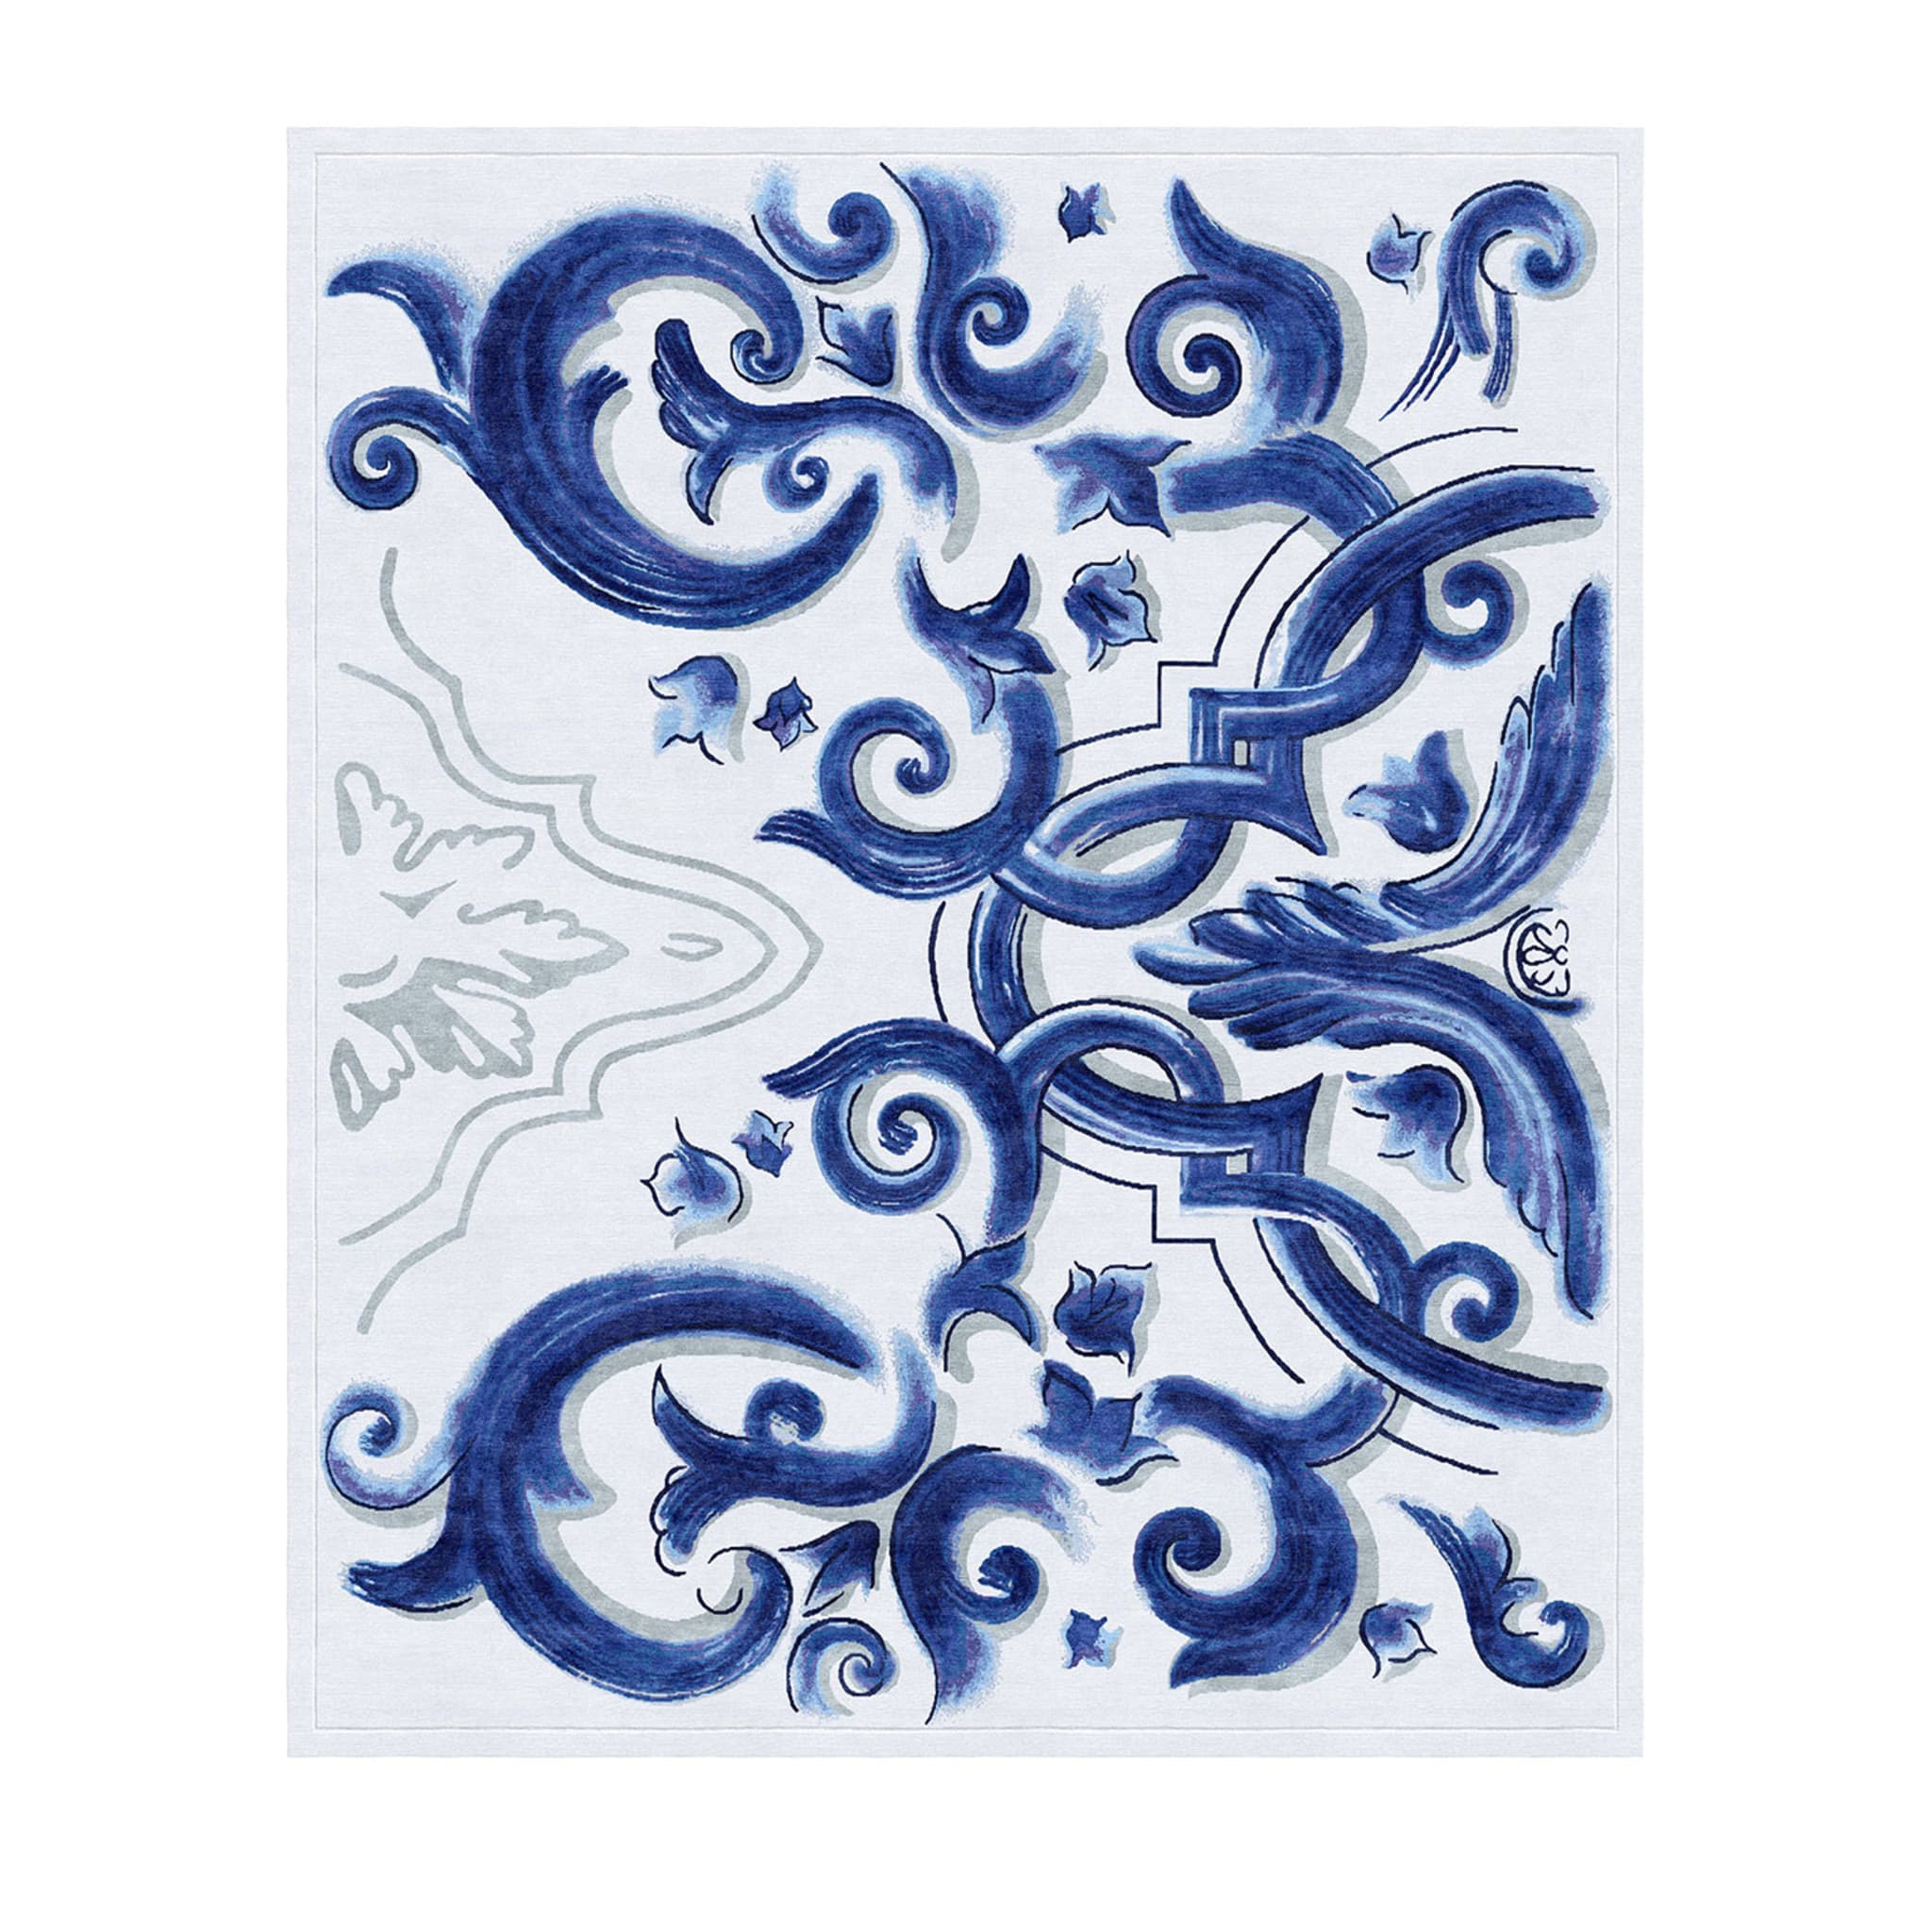 Tappeto rettangolare 120x180 cm in polipropilene bianco con rombi blu